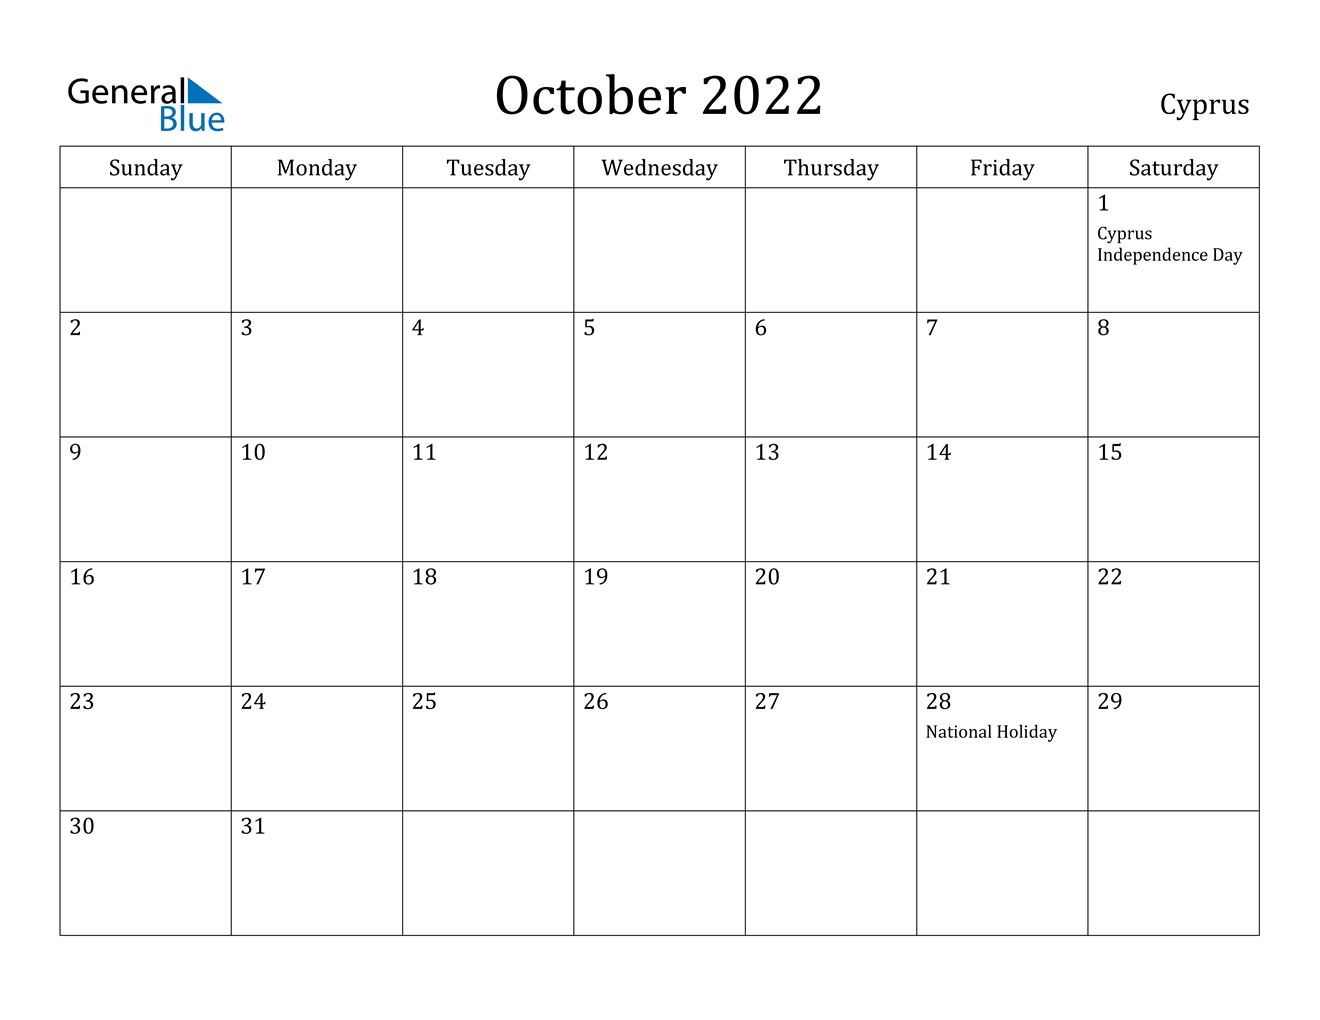 October 2022 Calendar - Cyprus